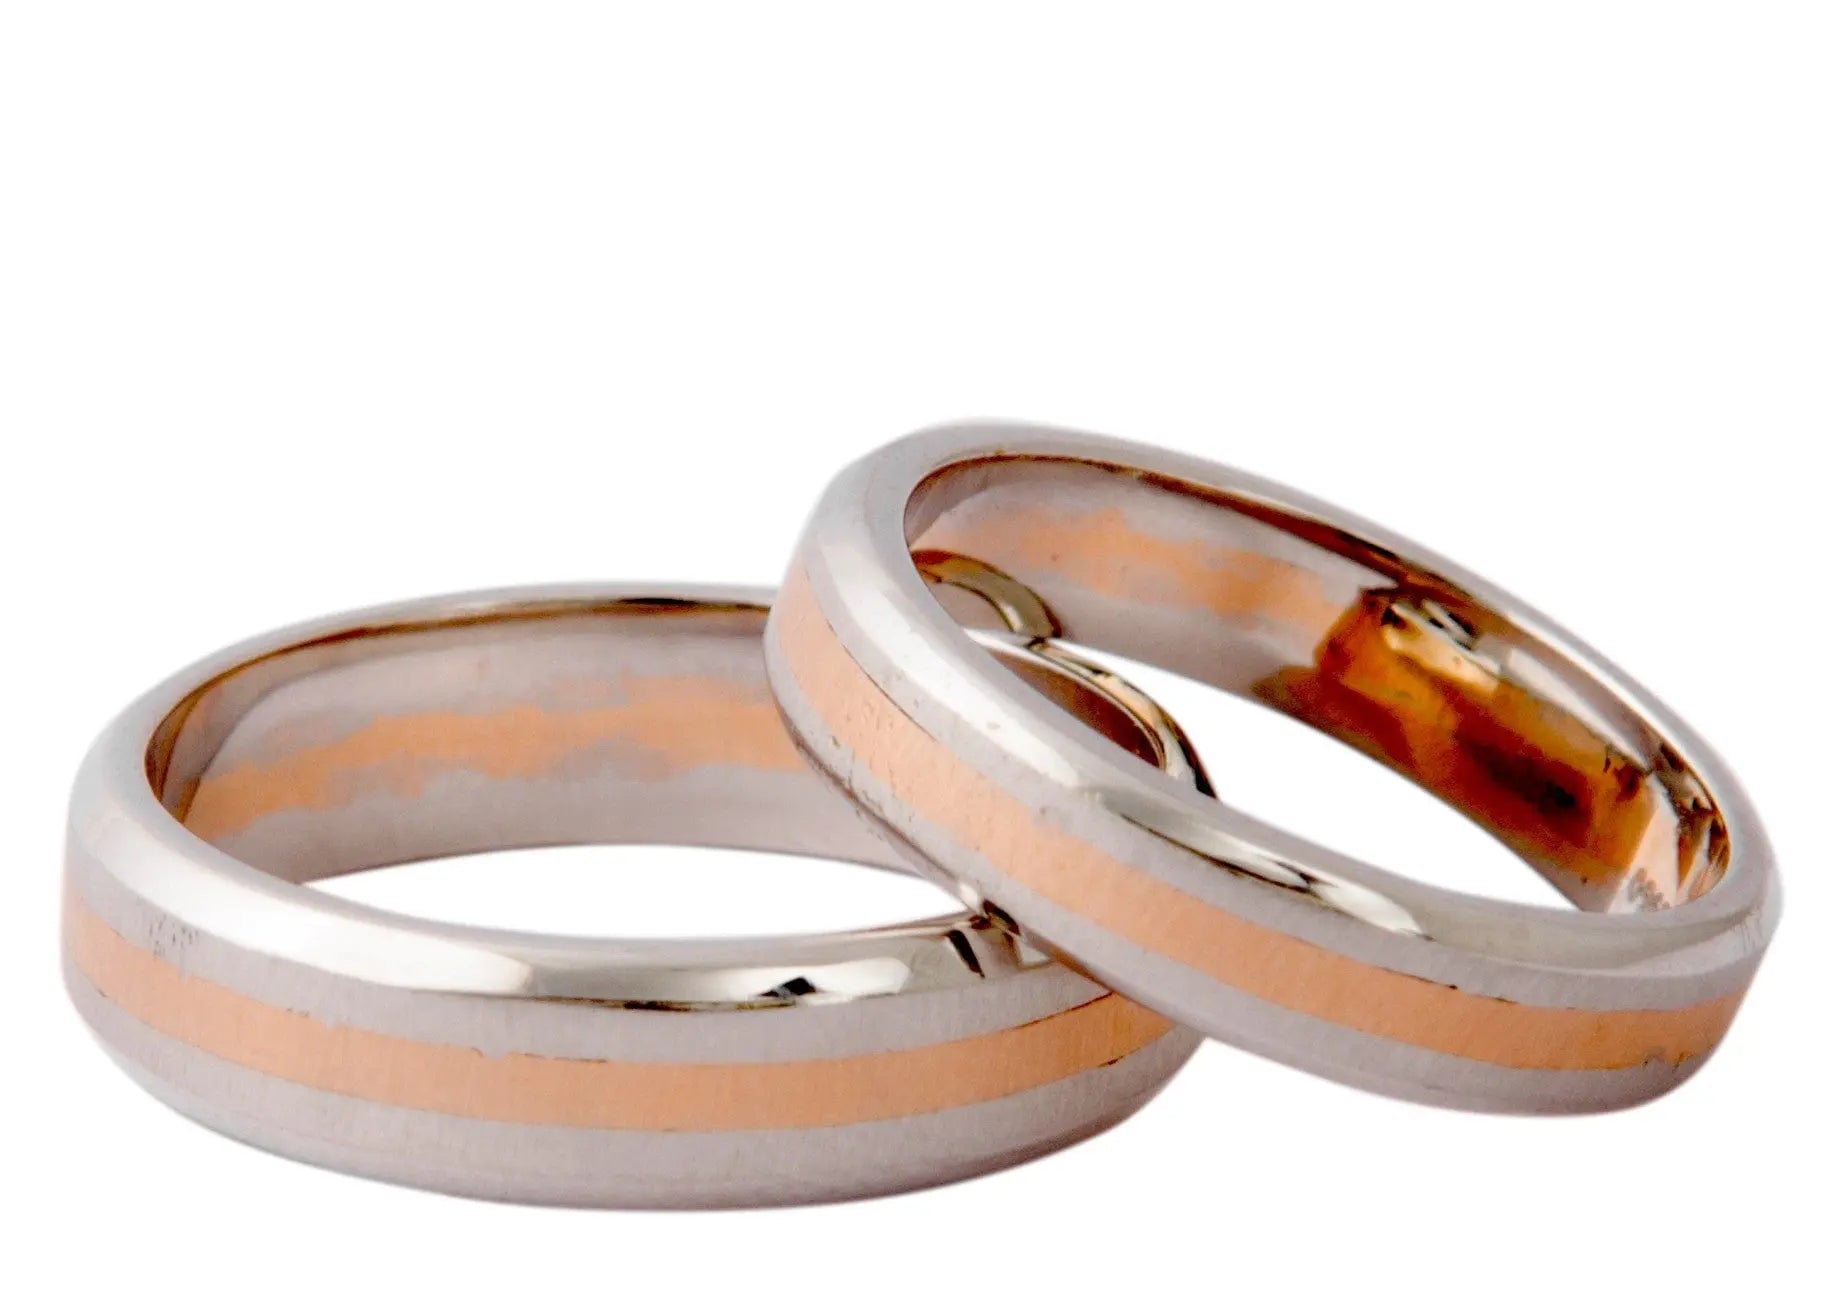 Buy 14k Rose gold ring - promise ring - Couple ring set online at  aStudio1980.com